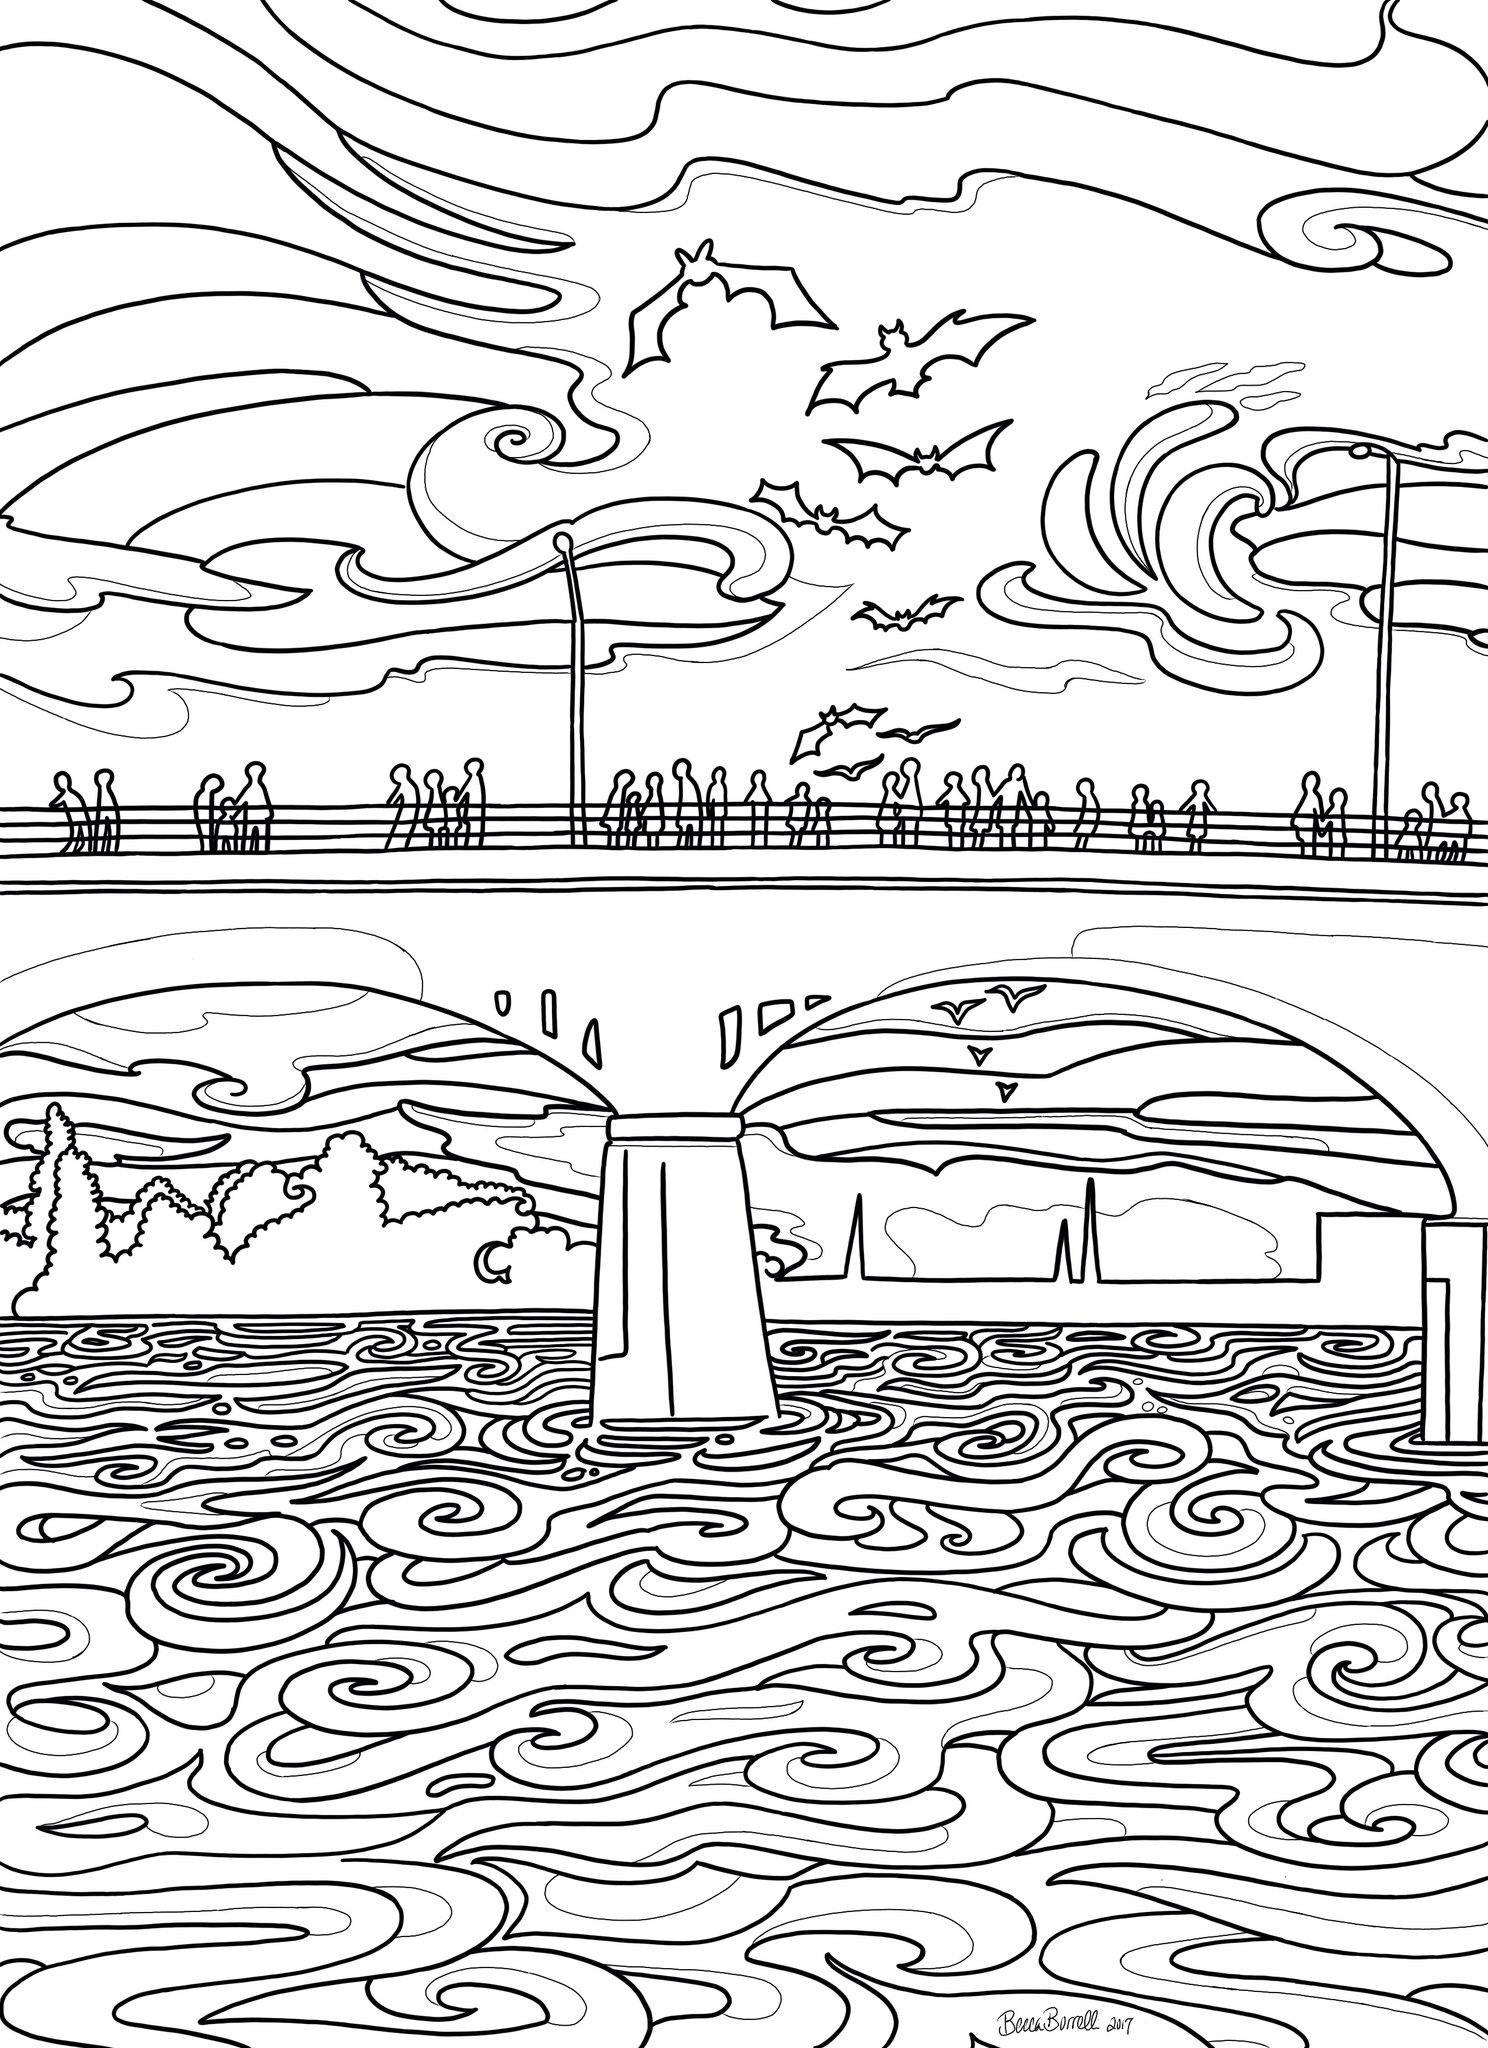 Austin Congress Bridge Coloring Page – Borrelli Illustrations